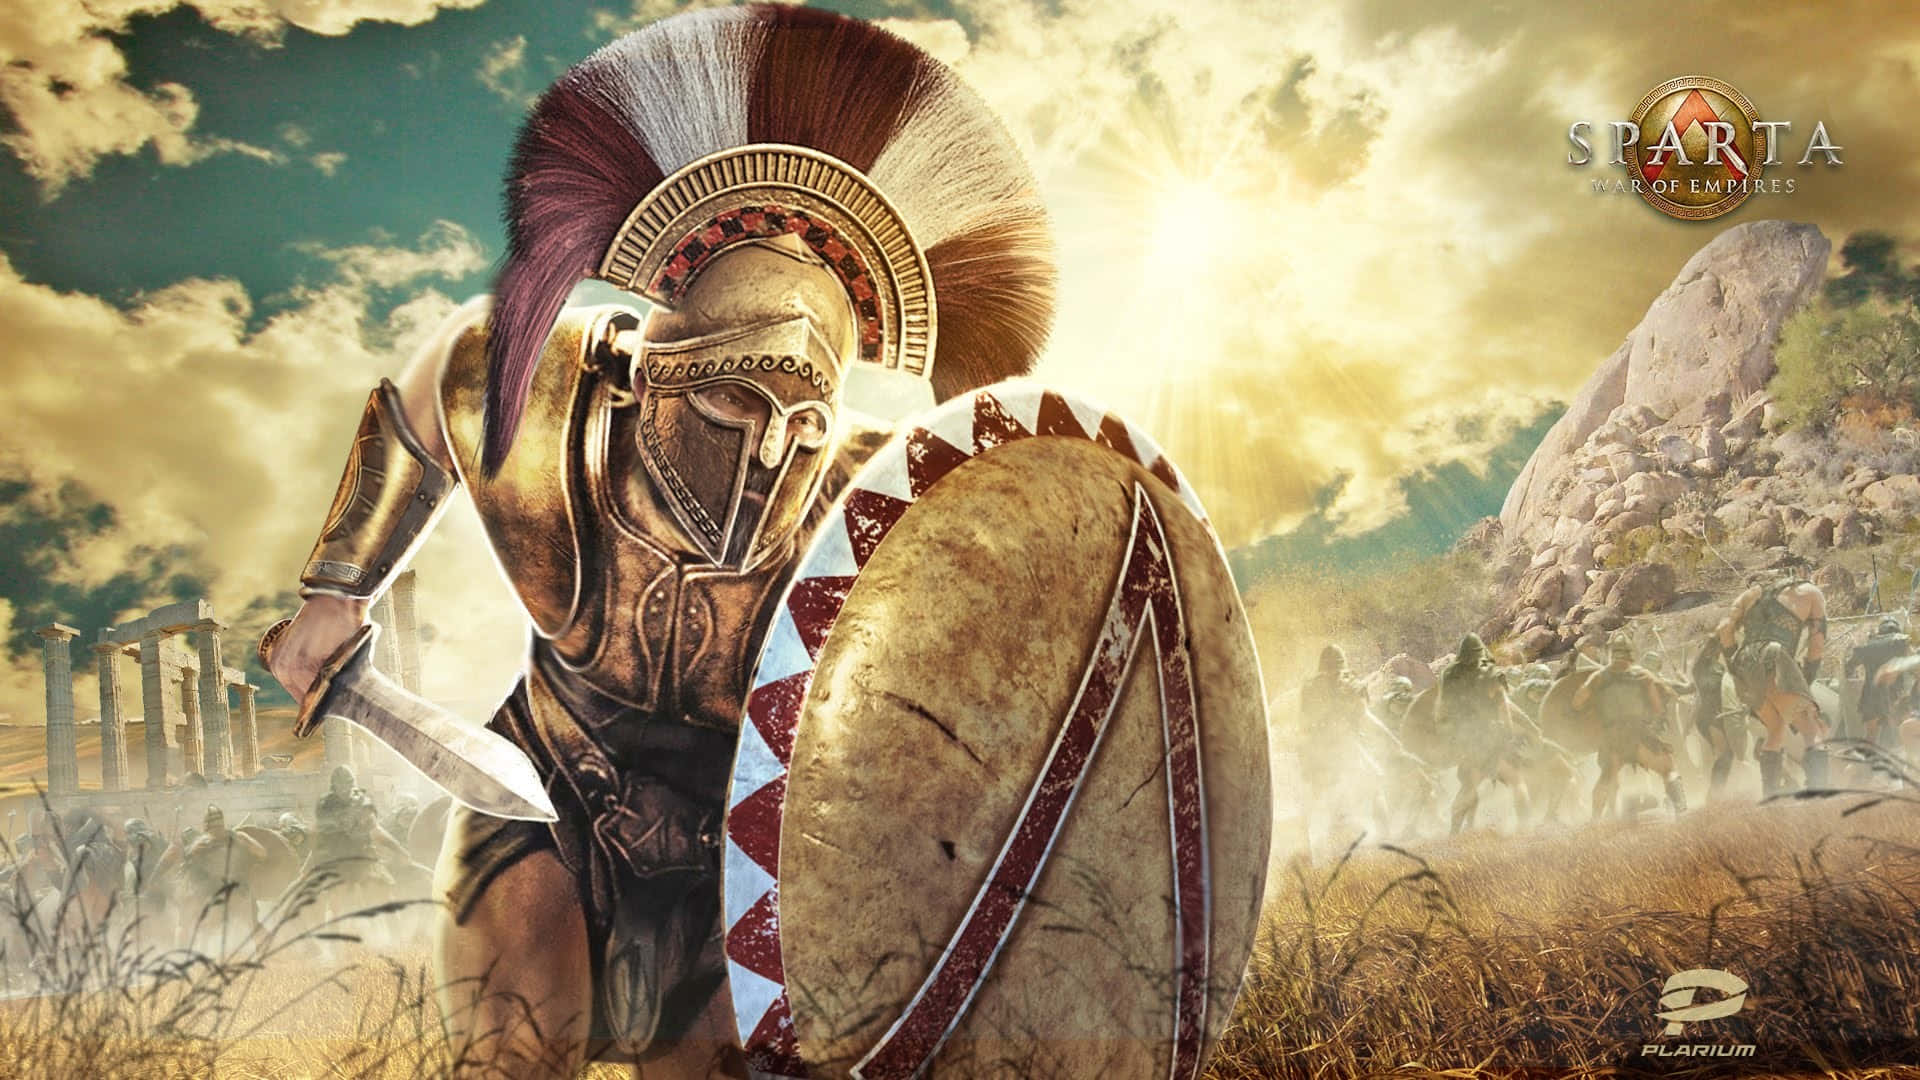 Spartaner 1920 X 1080 Wallpaper